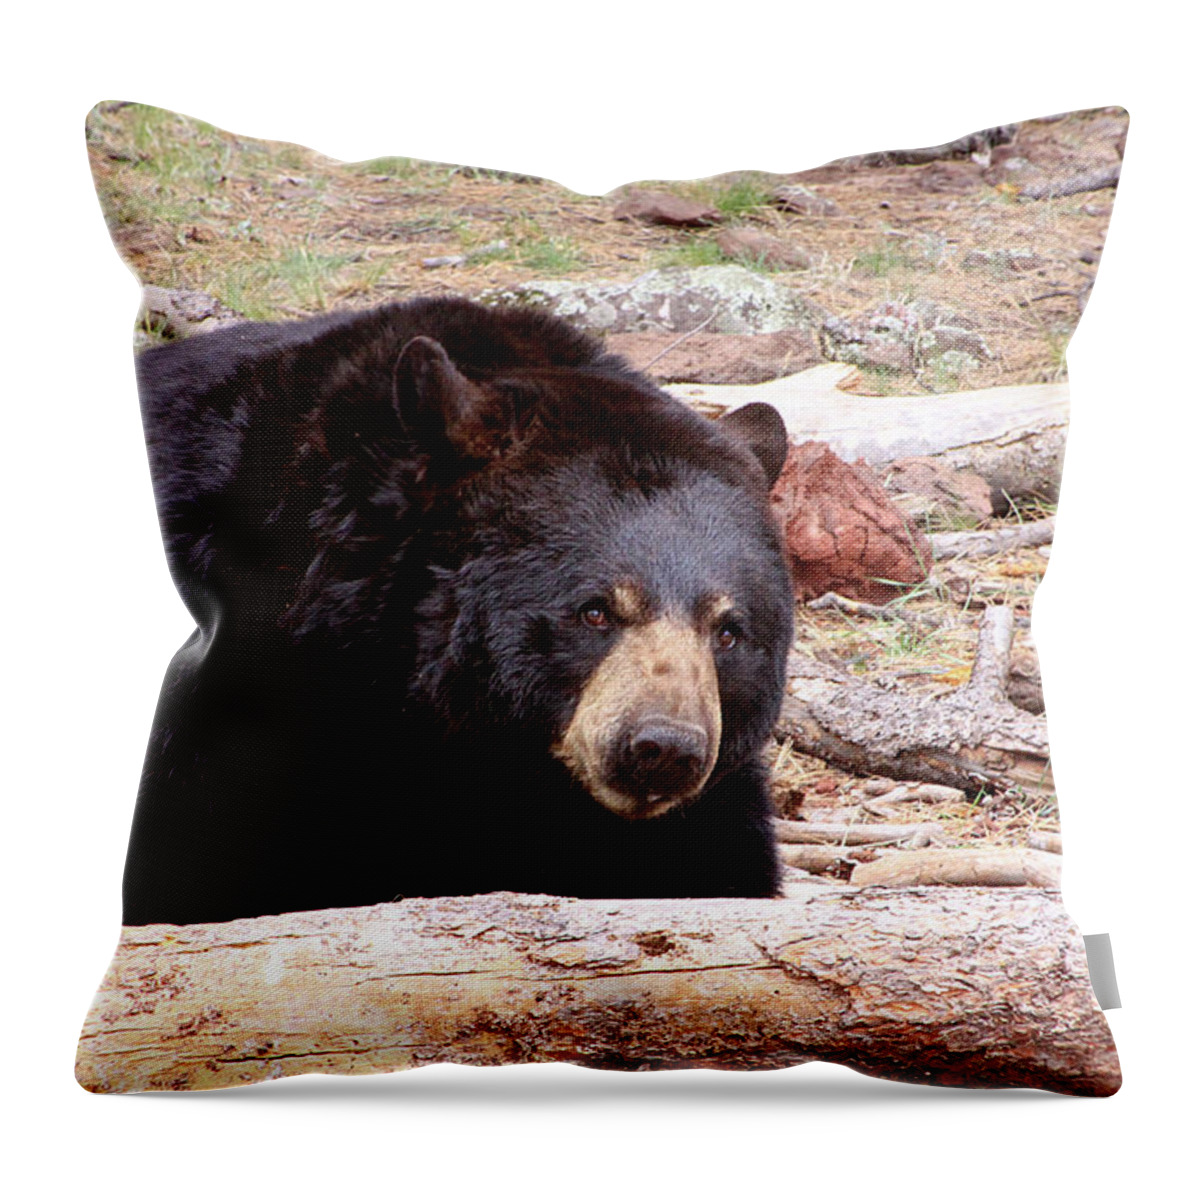 Airzona Throw Pillow featuring the photograph Big Black Bear, Arizona by Dawn Richards